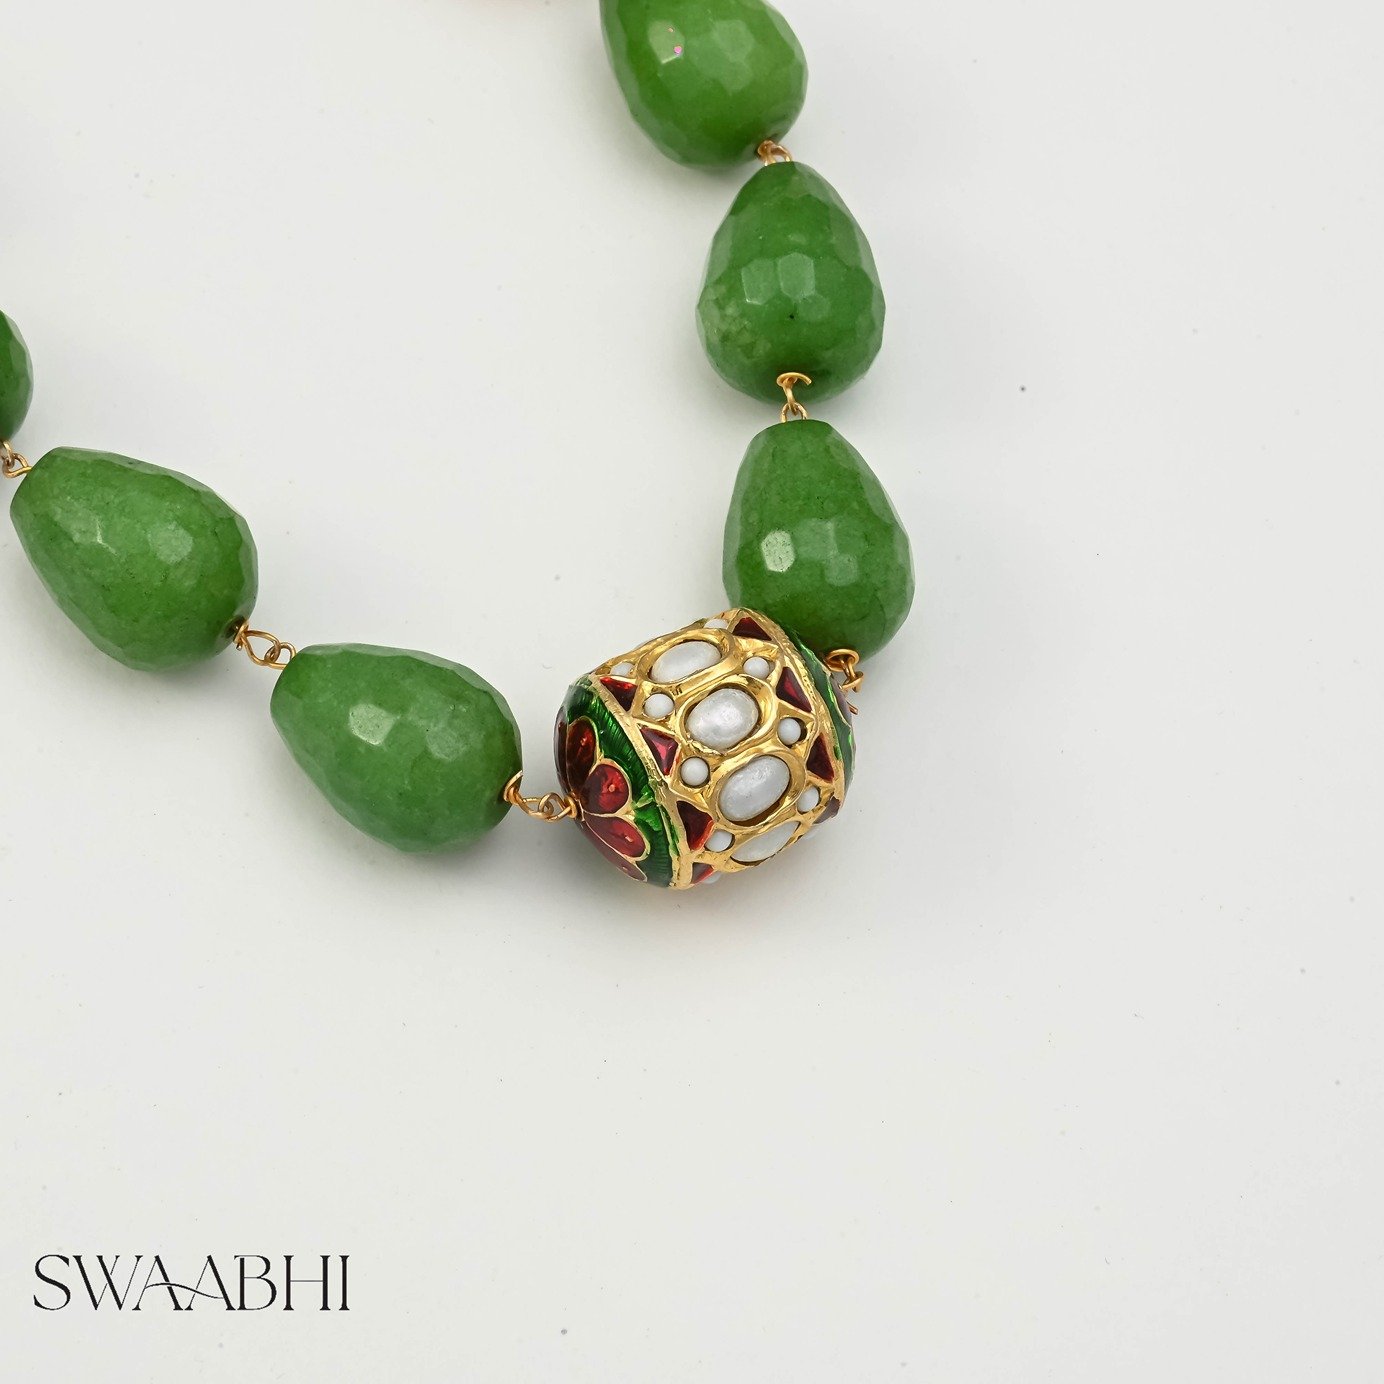 Striking Green Jade Bead Necklace